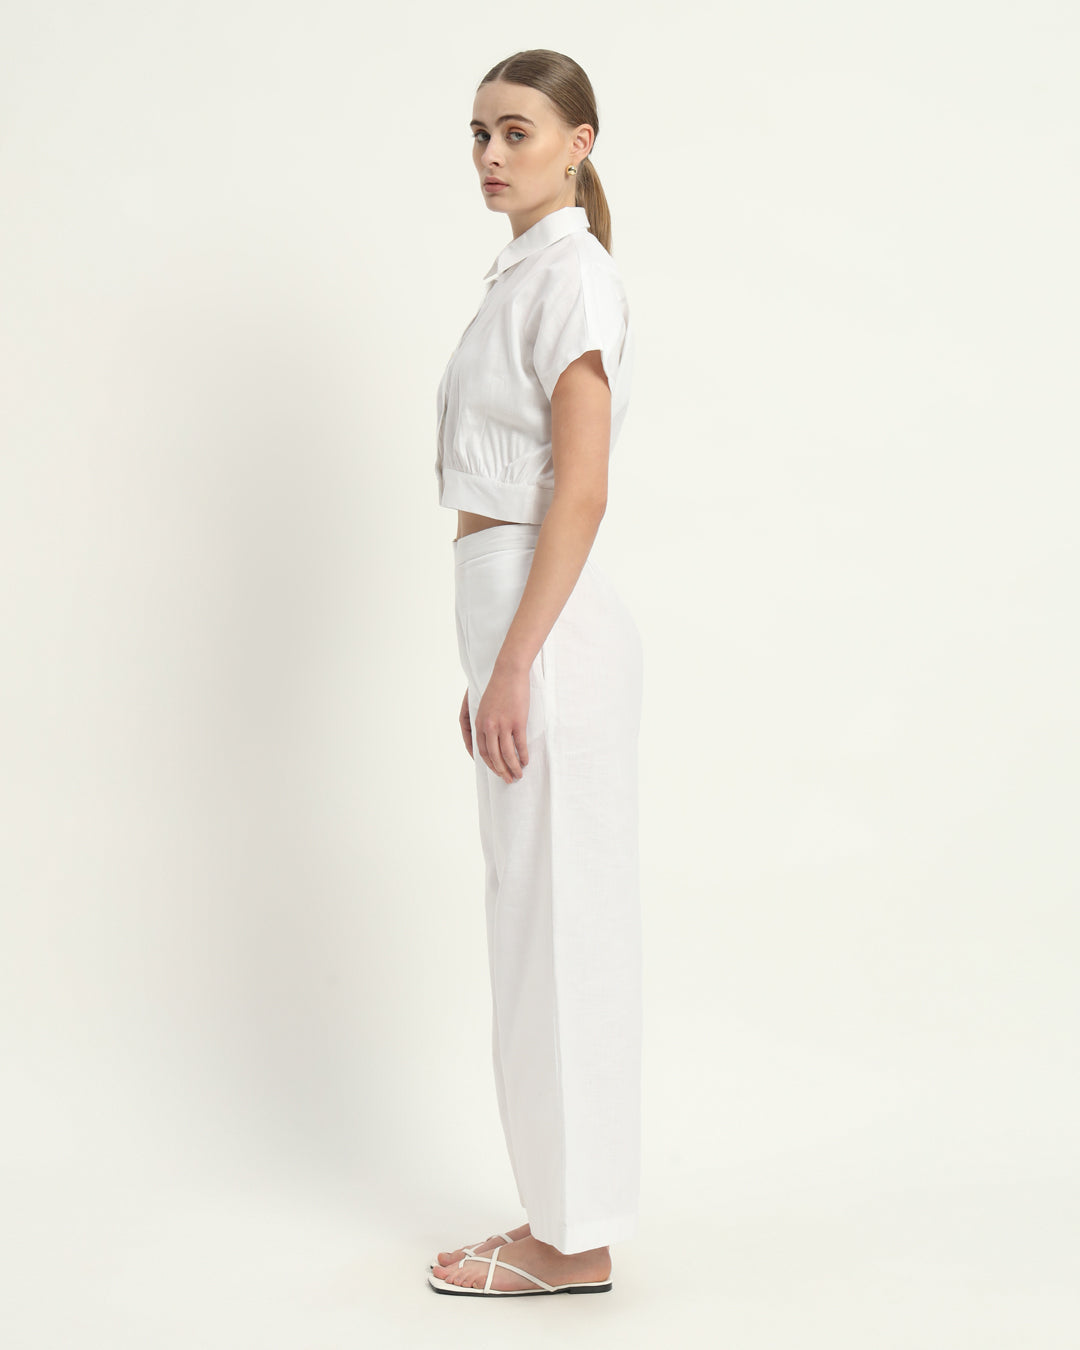 Pants Matching Set- White Chic Crop Linen